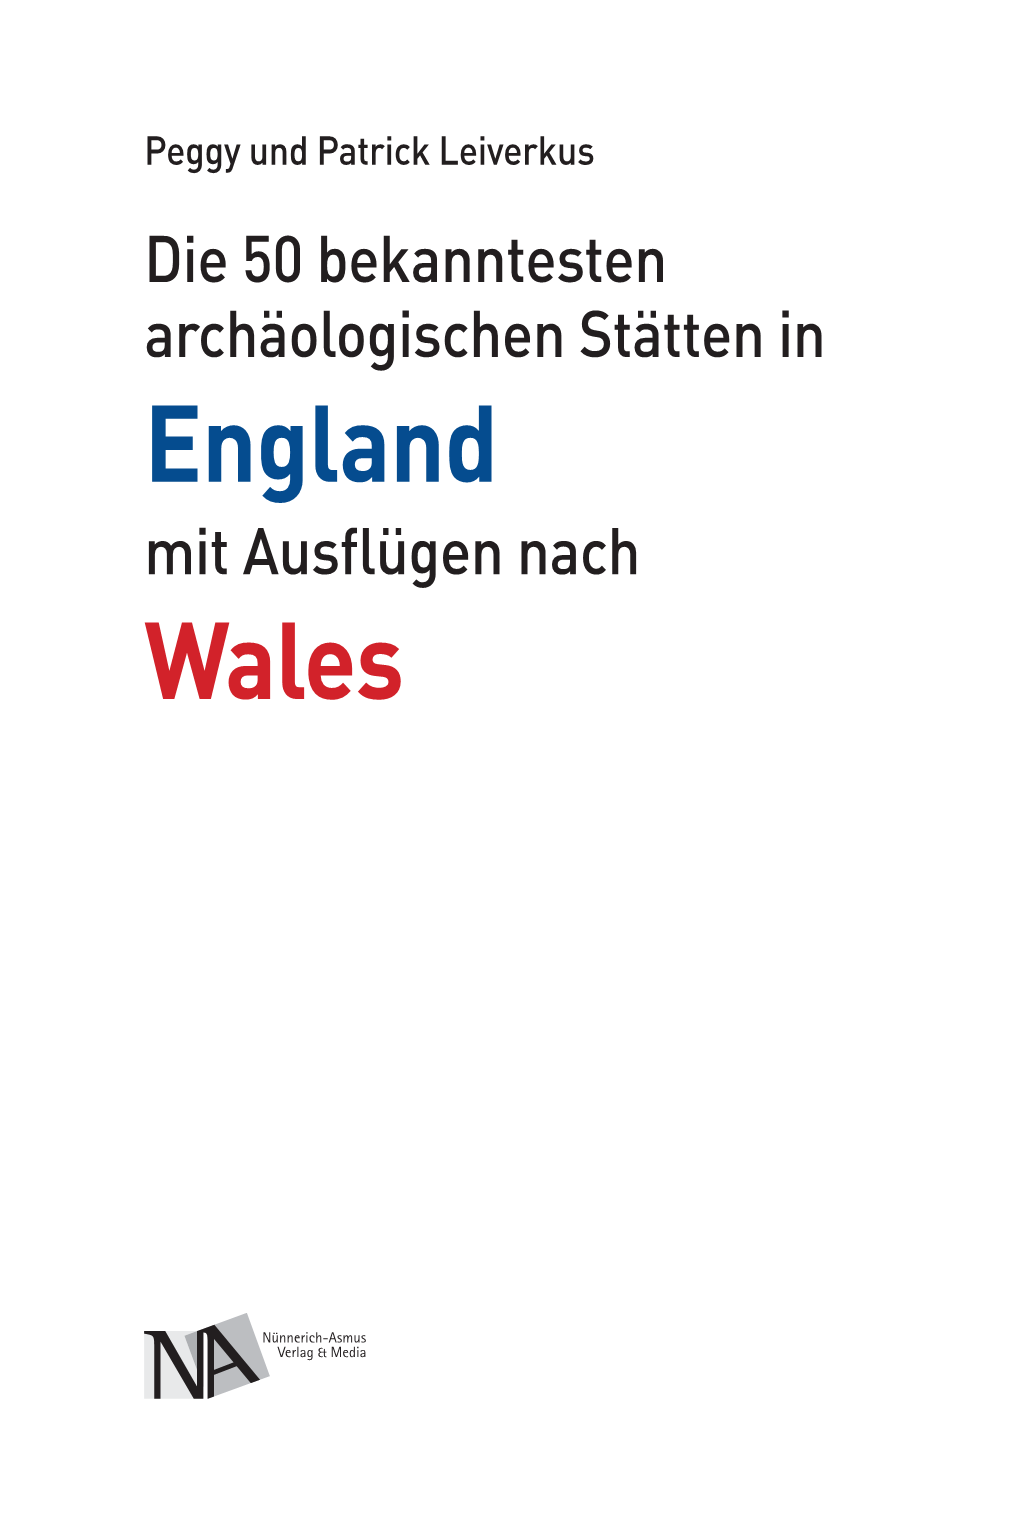 England Wales